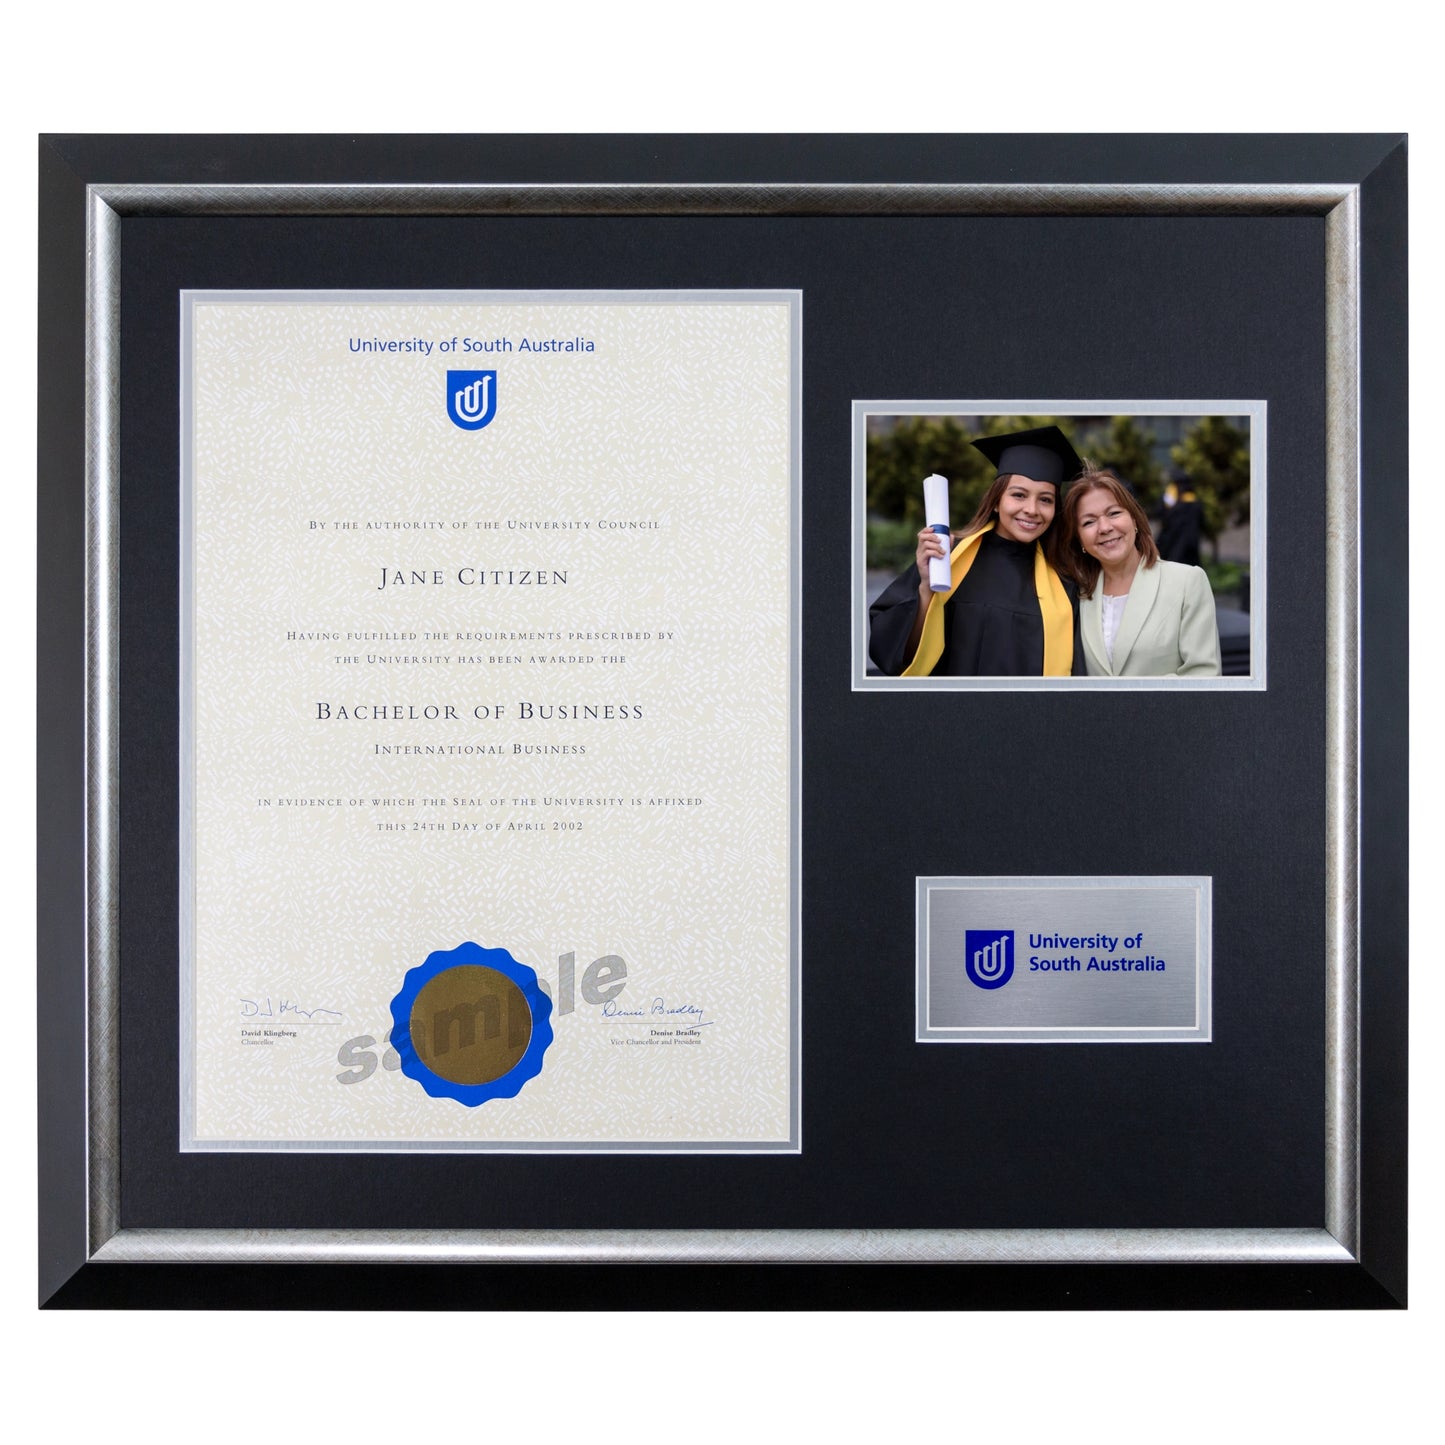 University of South Australia Photo Certificate Frame - Premium Silver